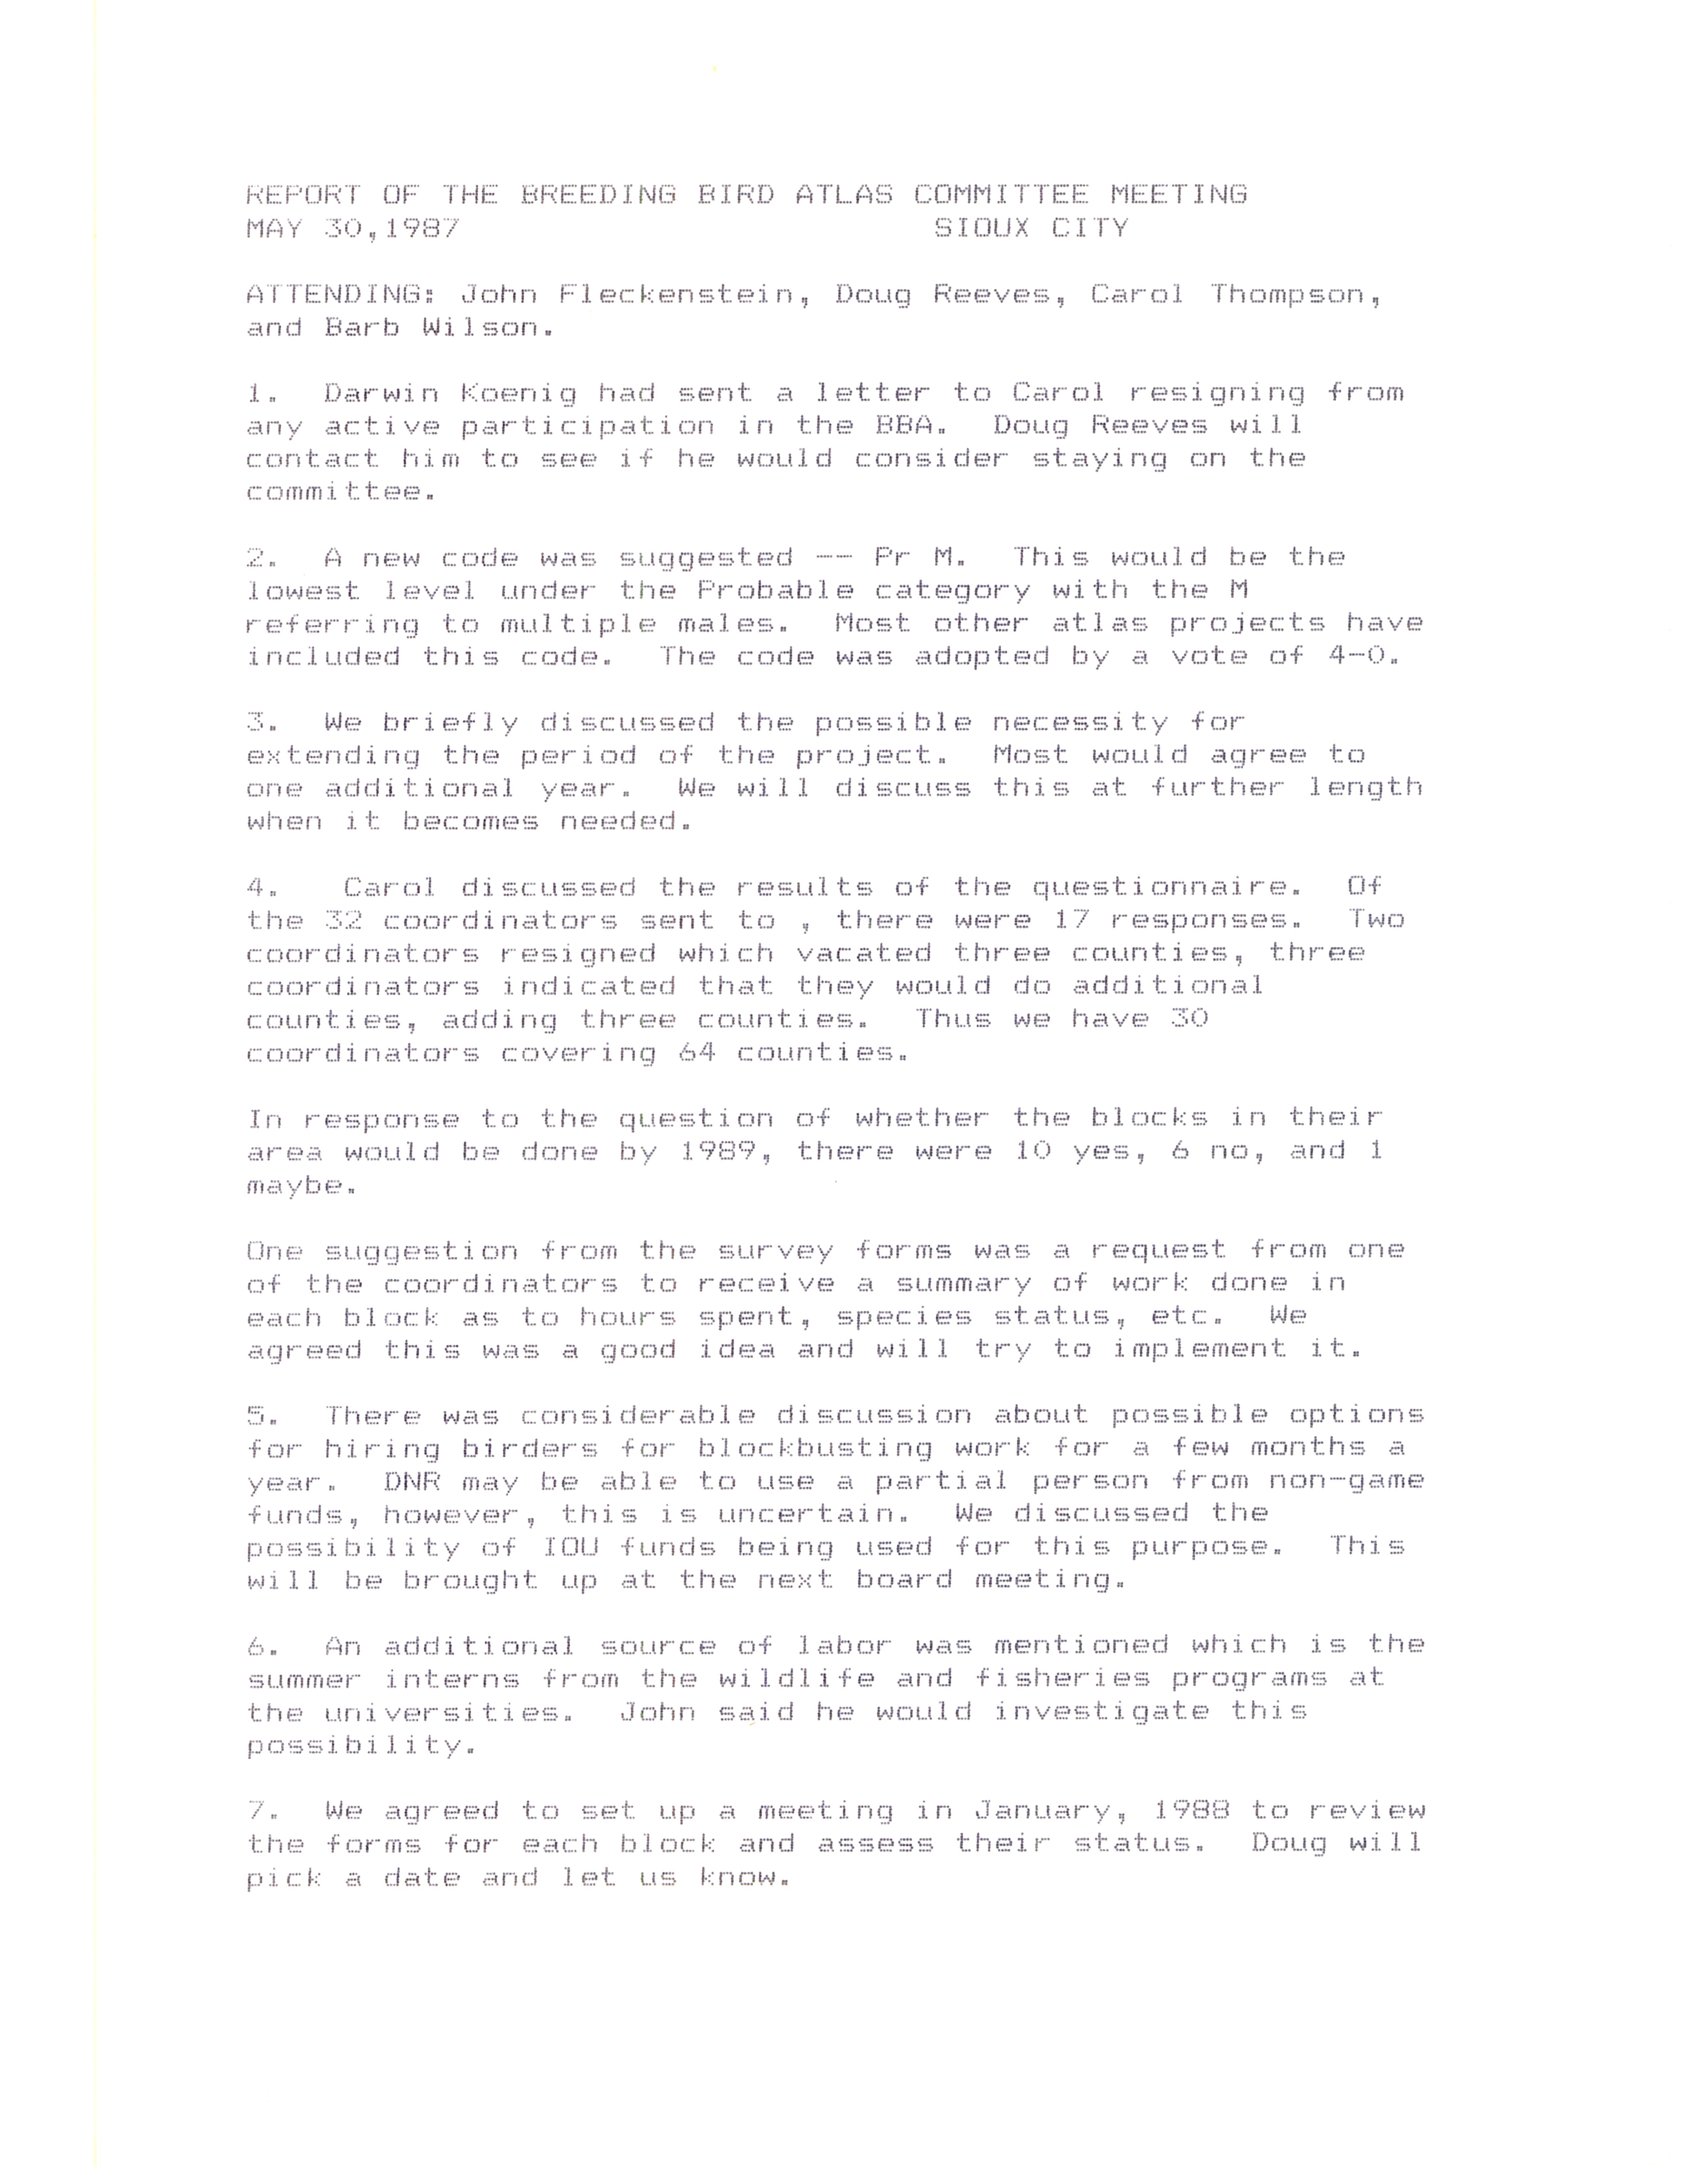 Report of the Breeding Bird Atlas Committee meeting, May 30, 1987